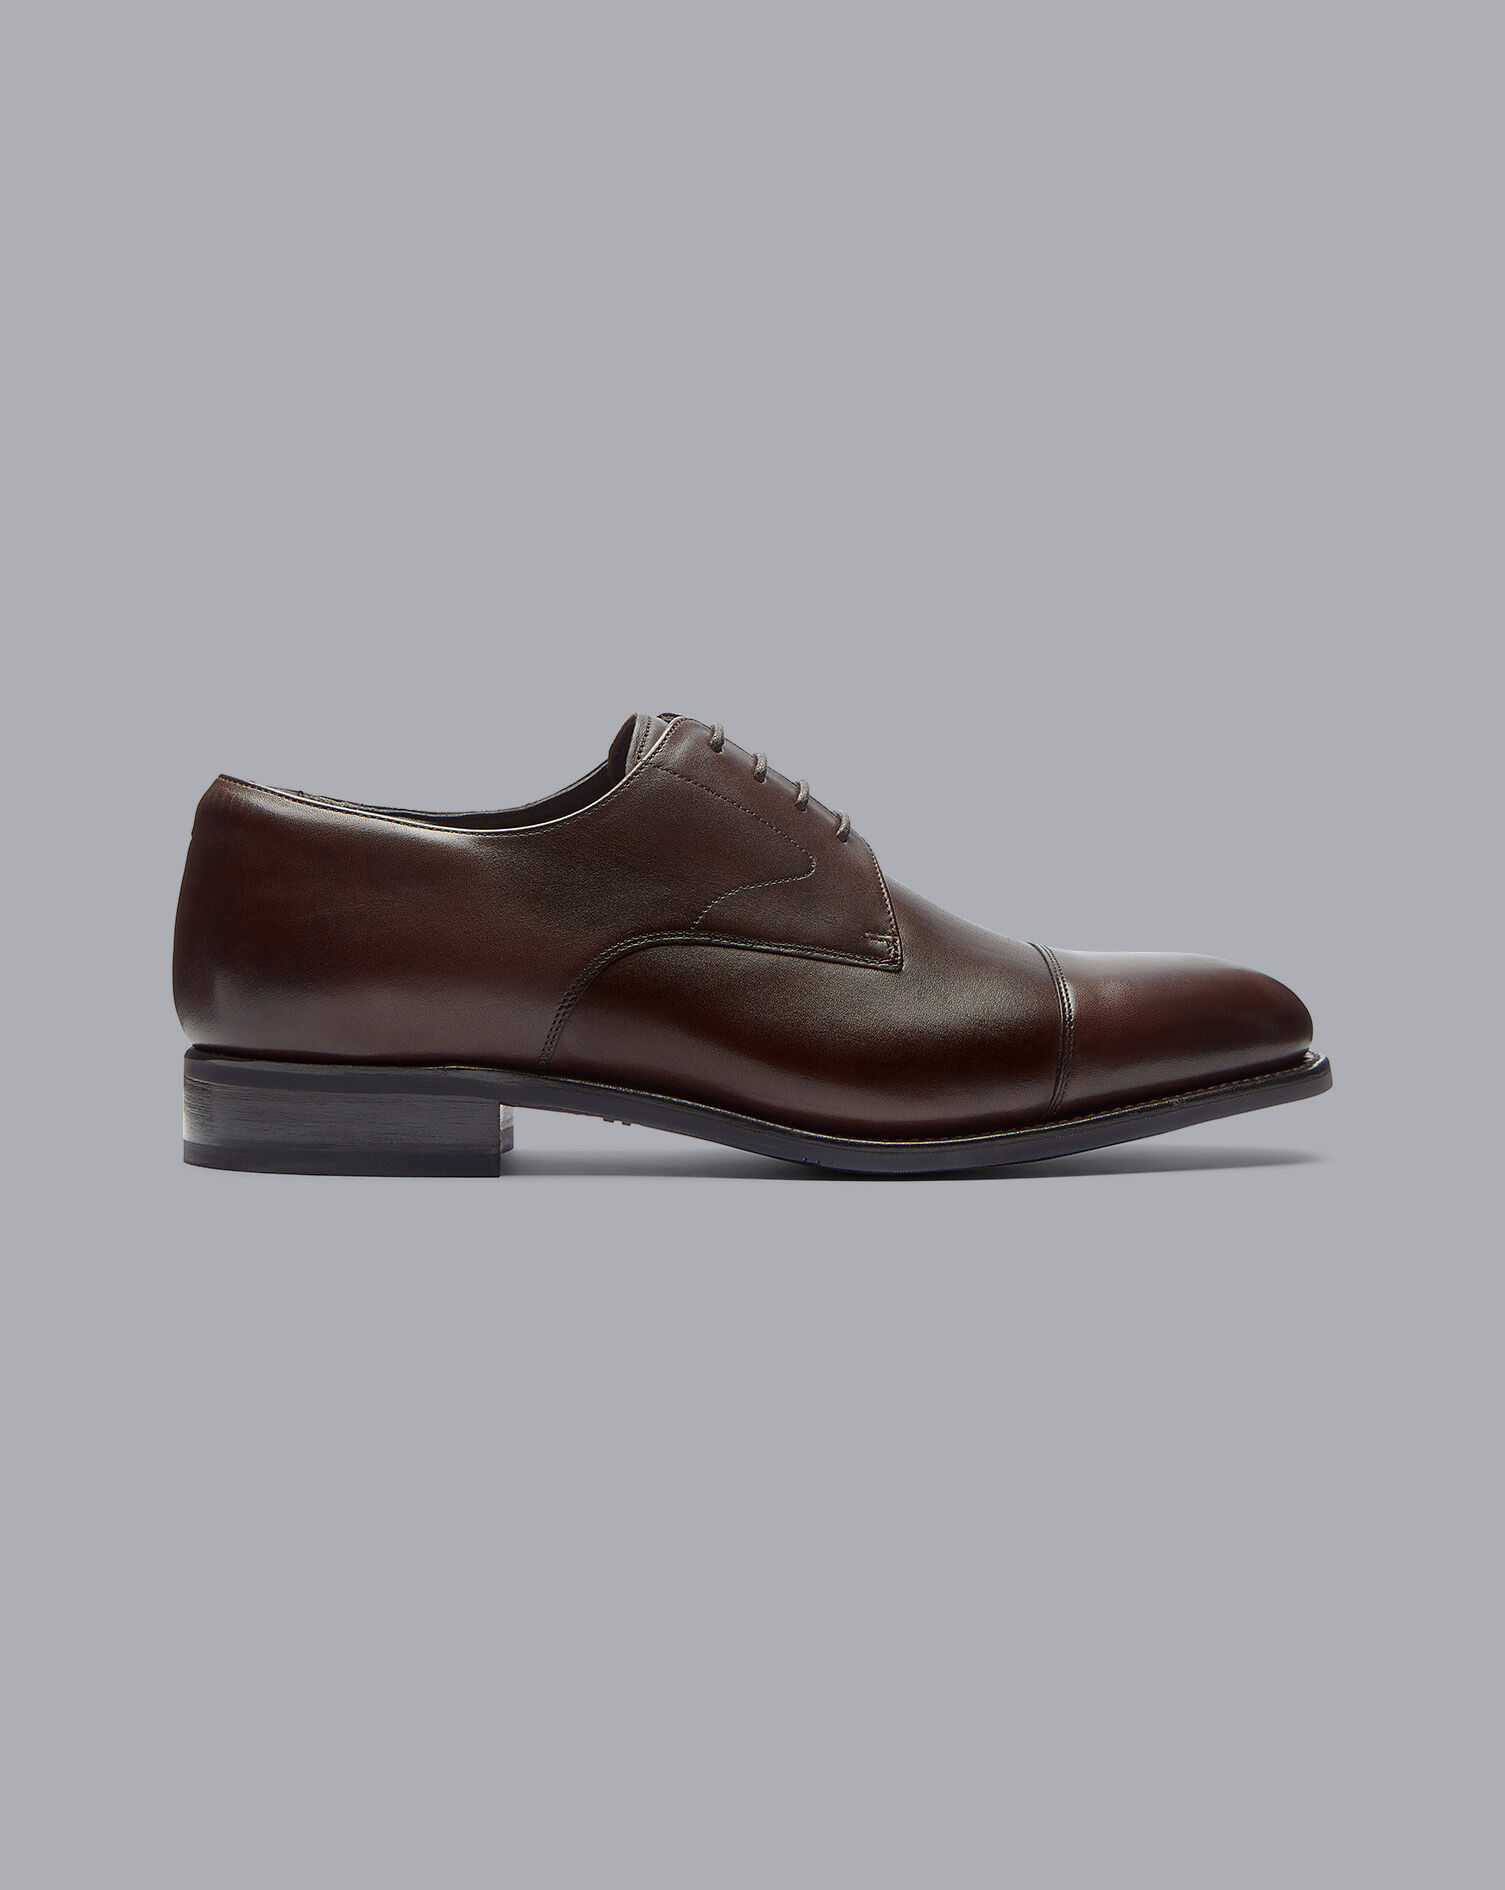 New Sonneti Mens Office Woodkirk School Casual Shoes Black RRP £39.99 UK Size 8